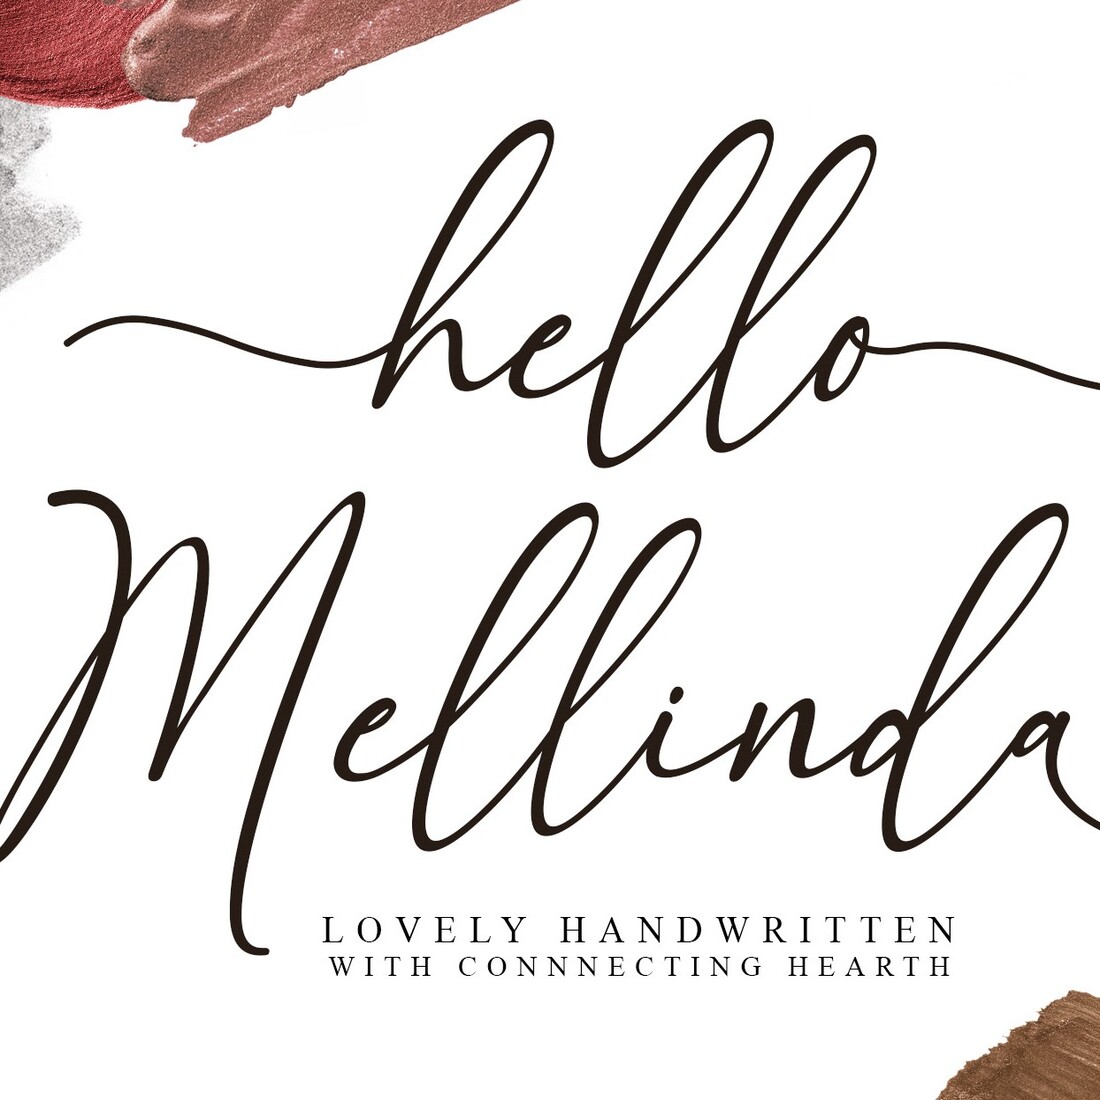 Hello Melinda Modern Calligraphy Font cover image.